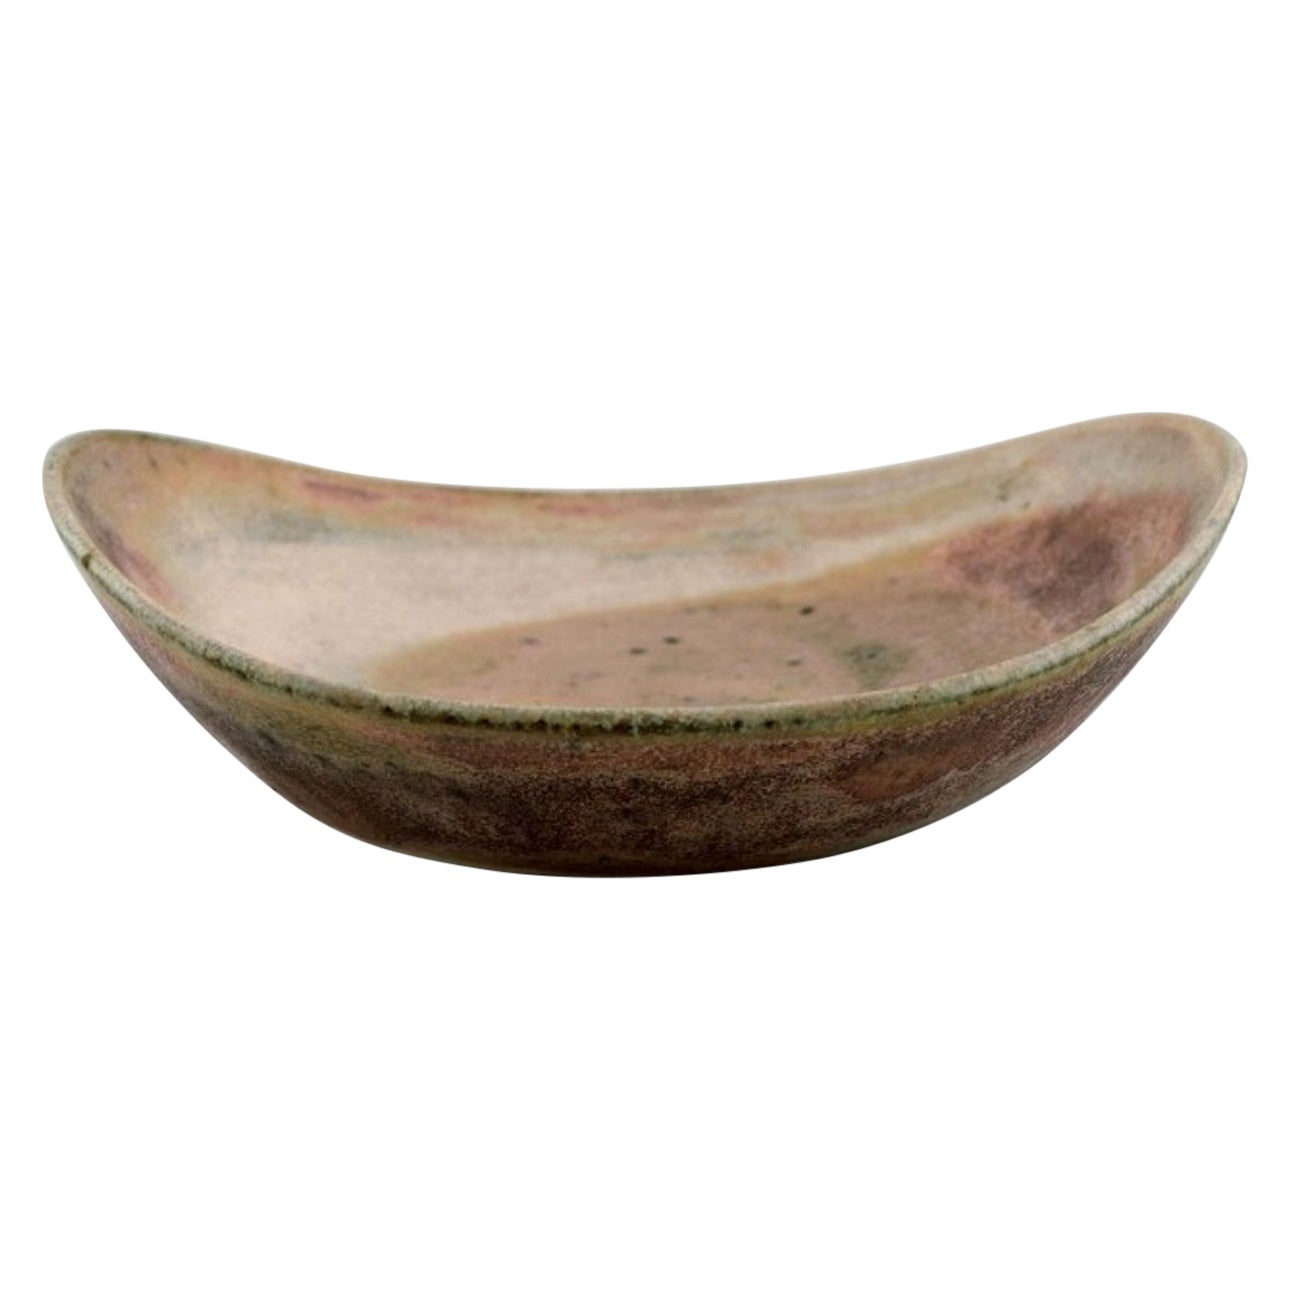 Lucie Rie, Austrian-born British ceramist. Large modernist bowl in stoneware. For Sale